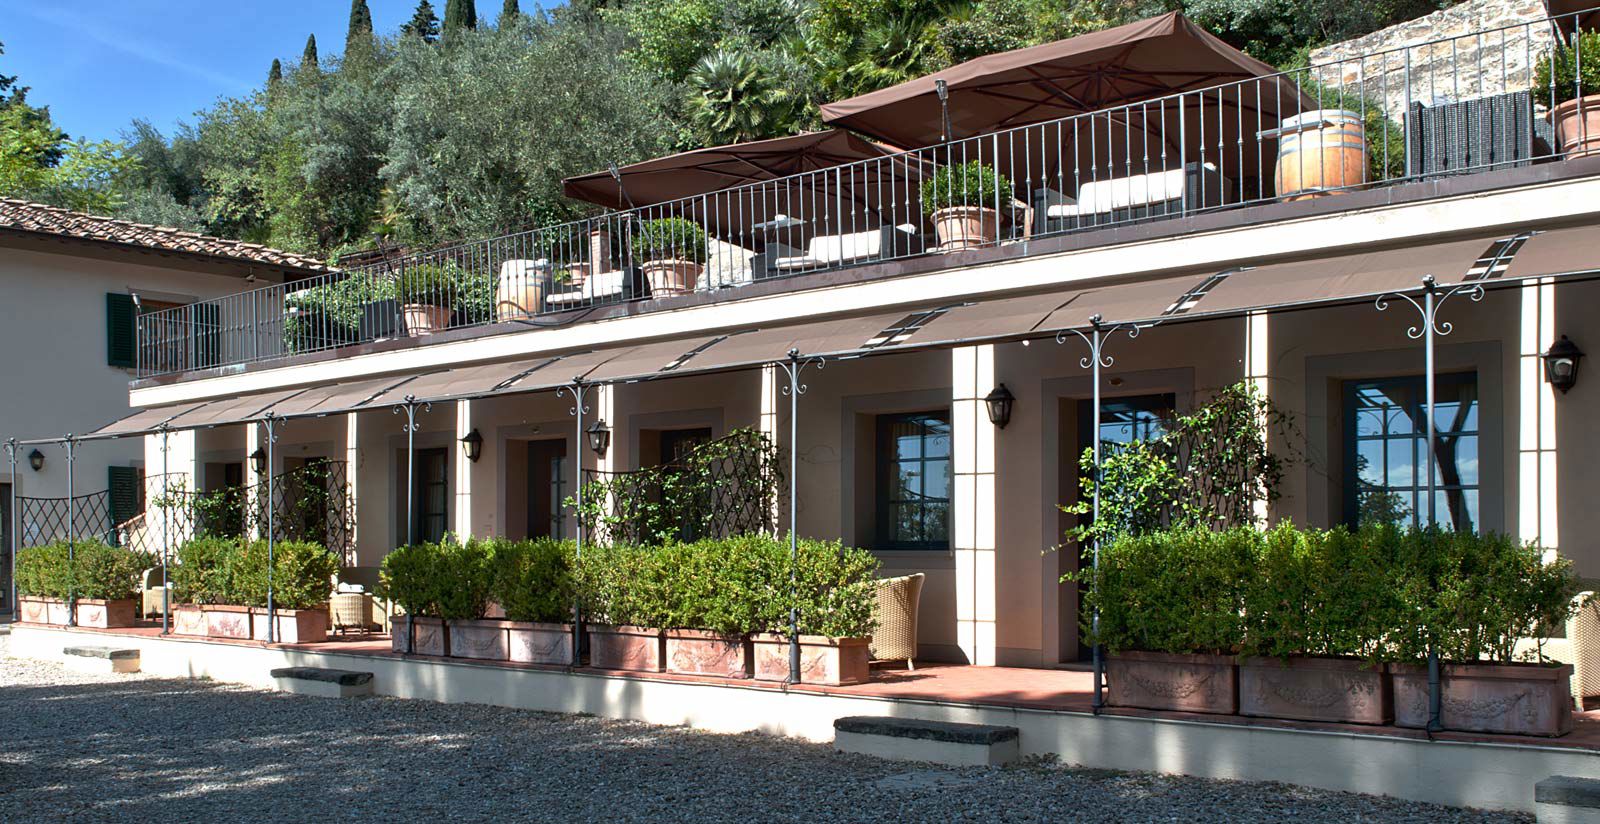 Hotel Villa Fiesole - Location per matrimoni a Firenze 4